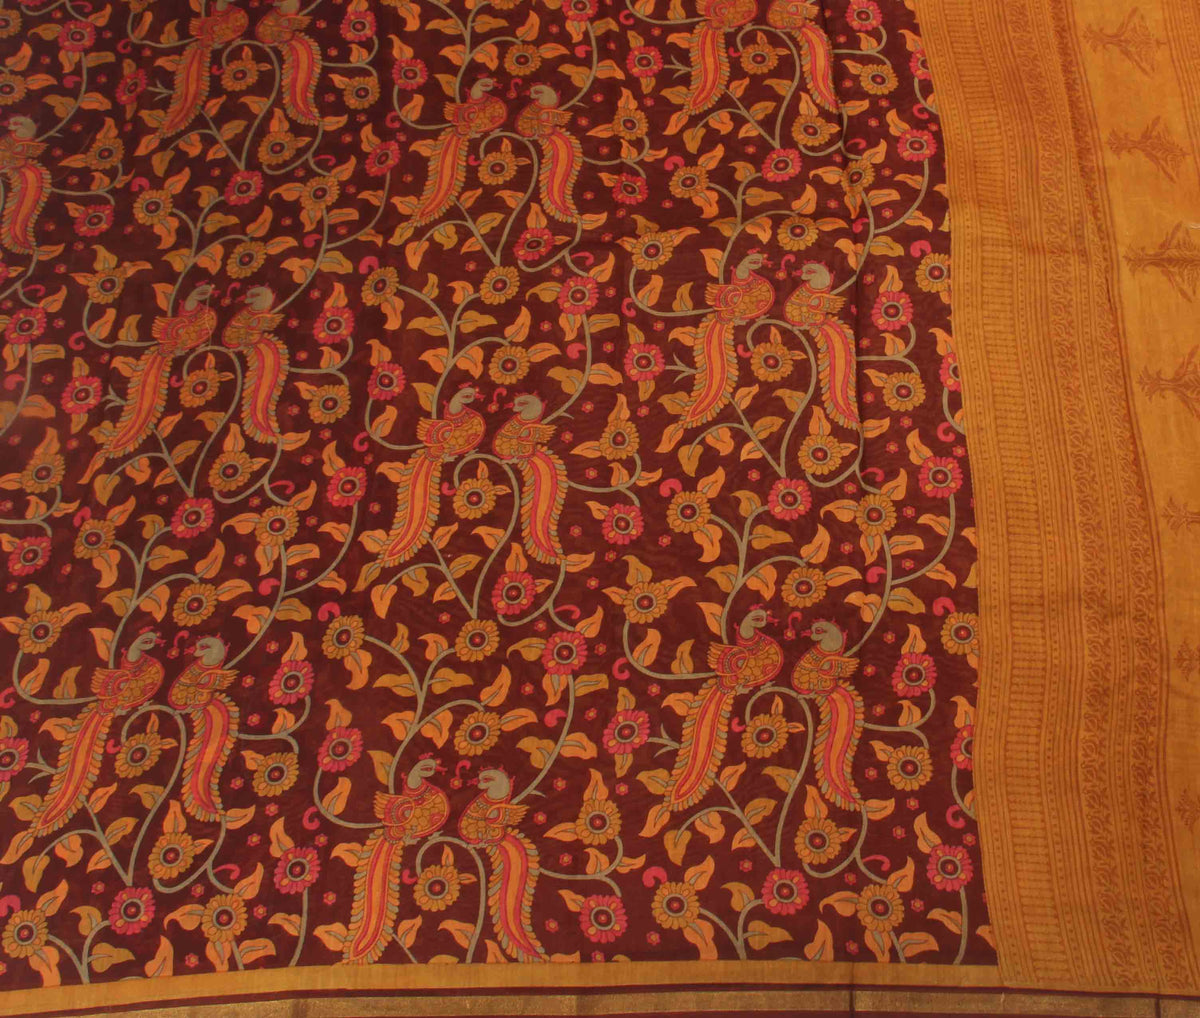 Maroon Silk Cotton Saree with Bird and floral prints (2) flat